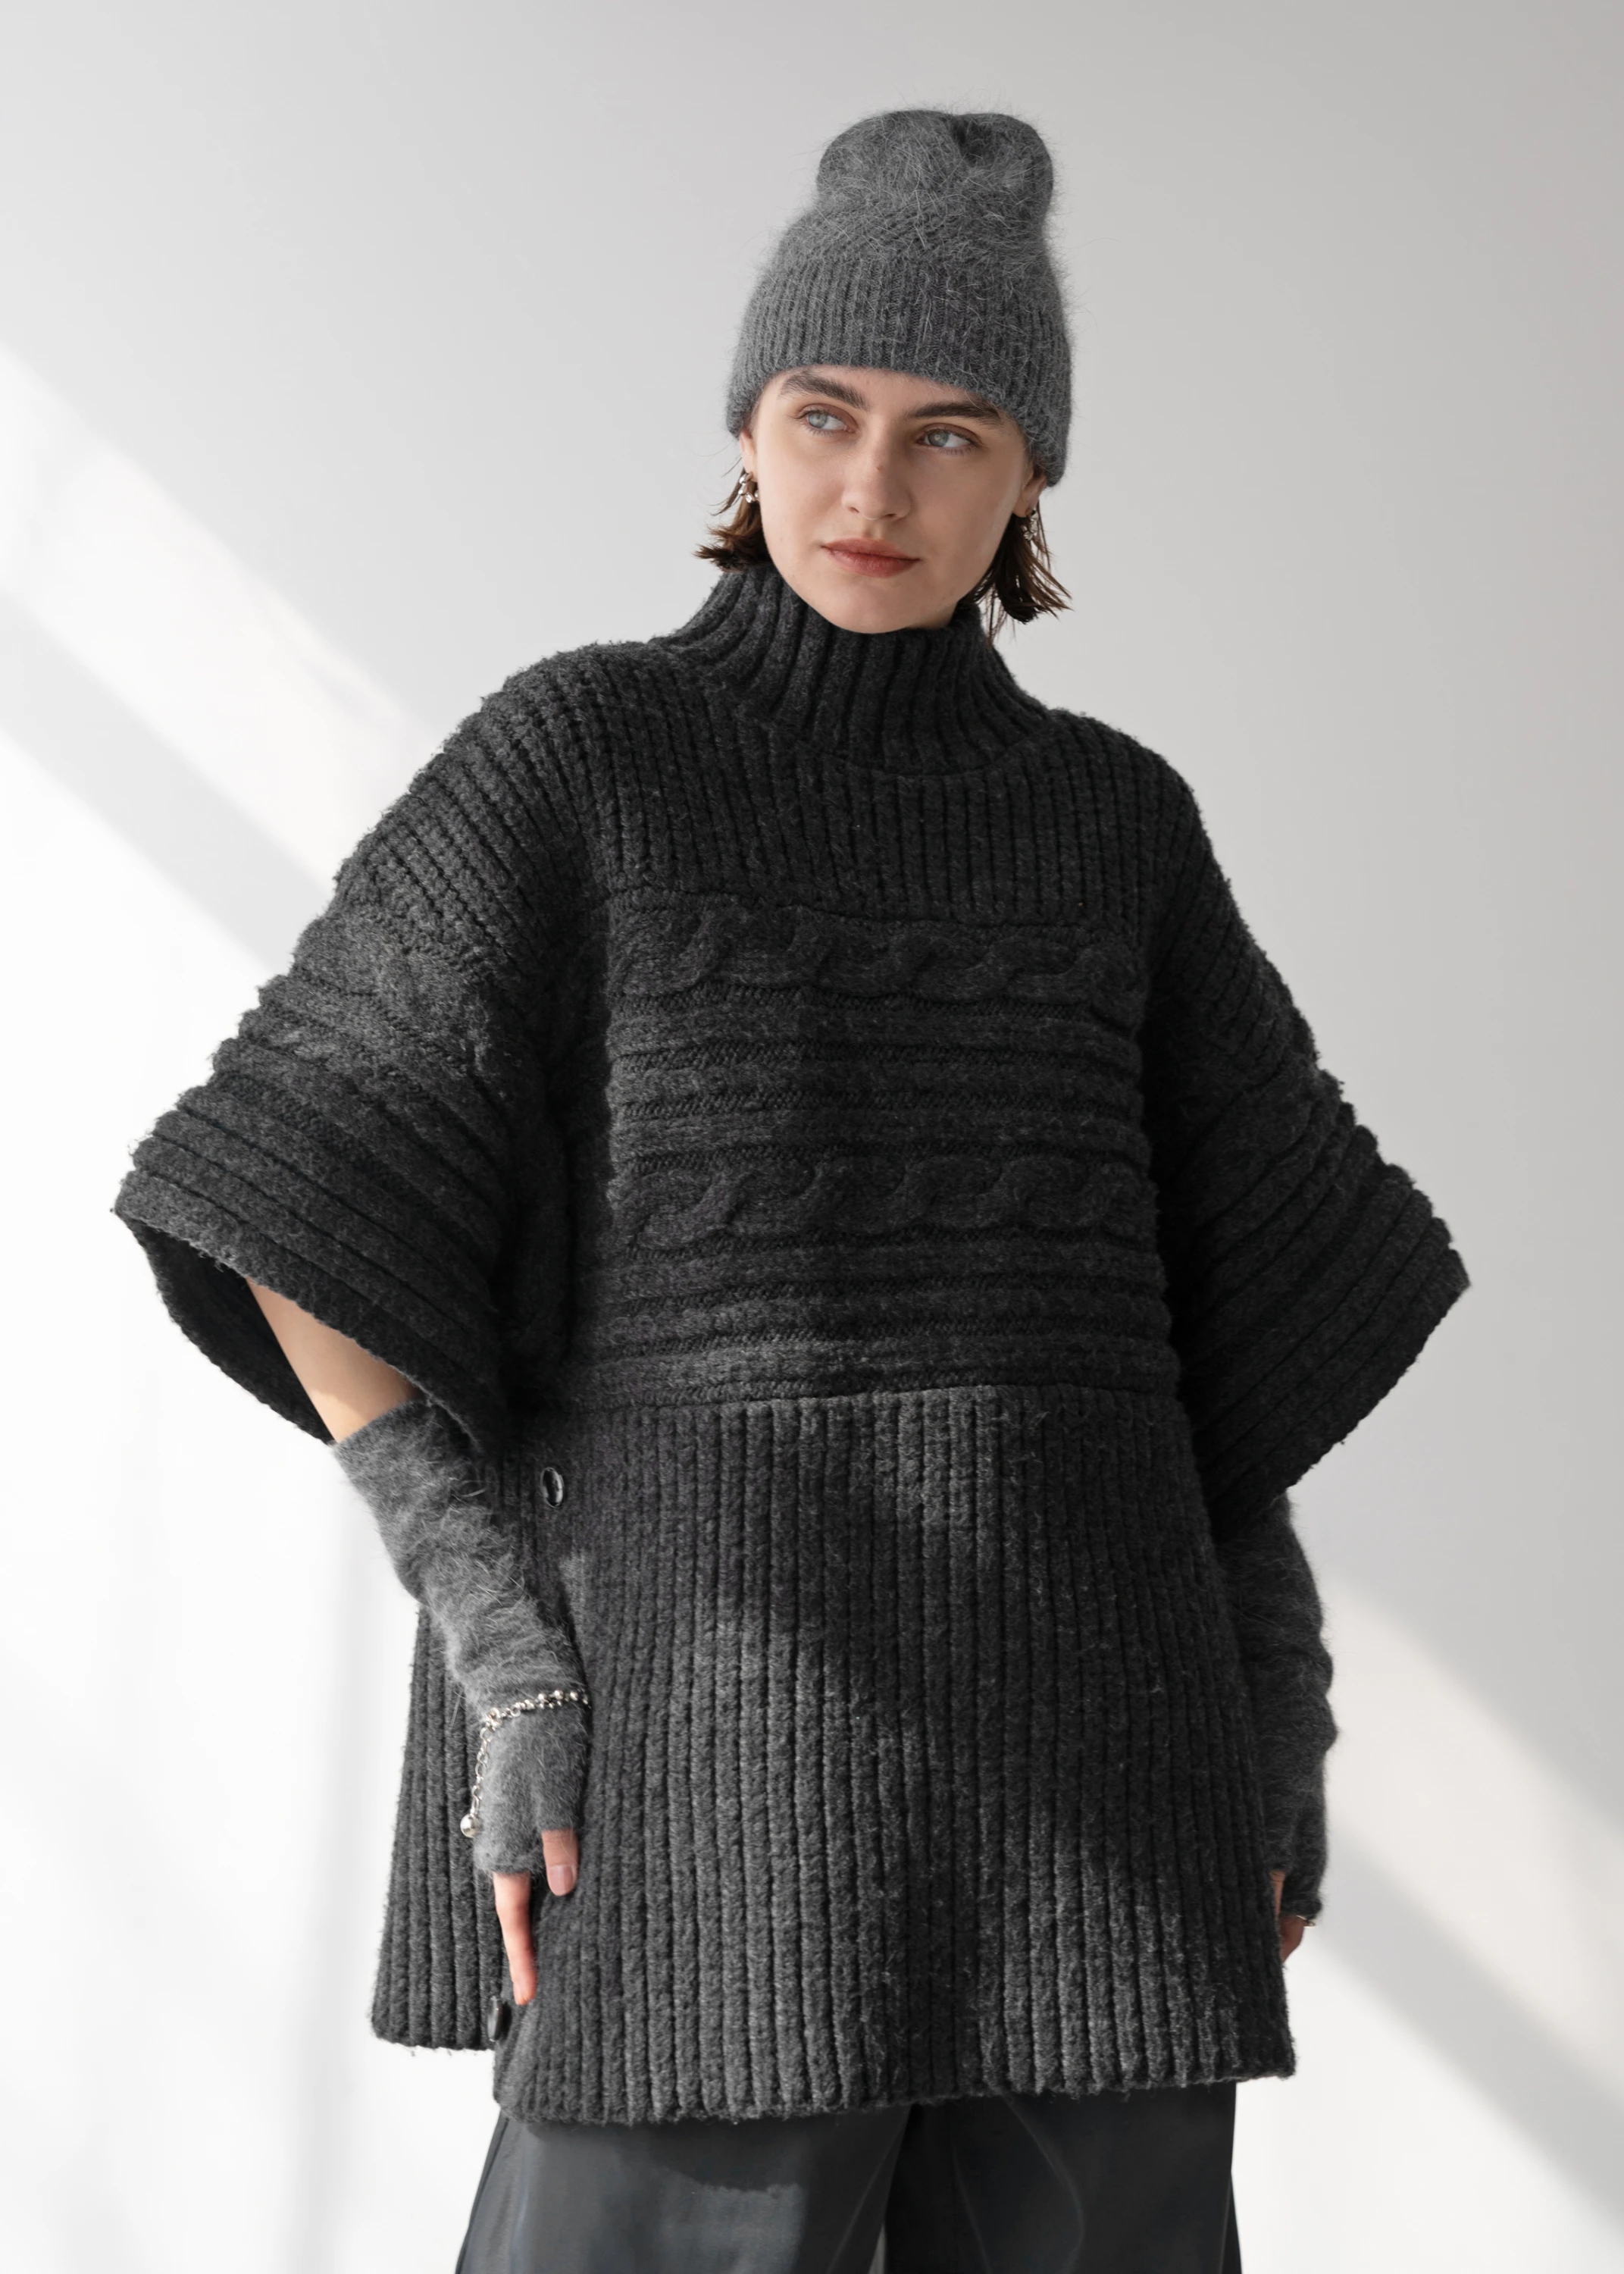 angora arm warmer knit Treat Ürself